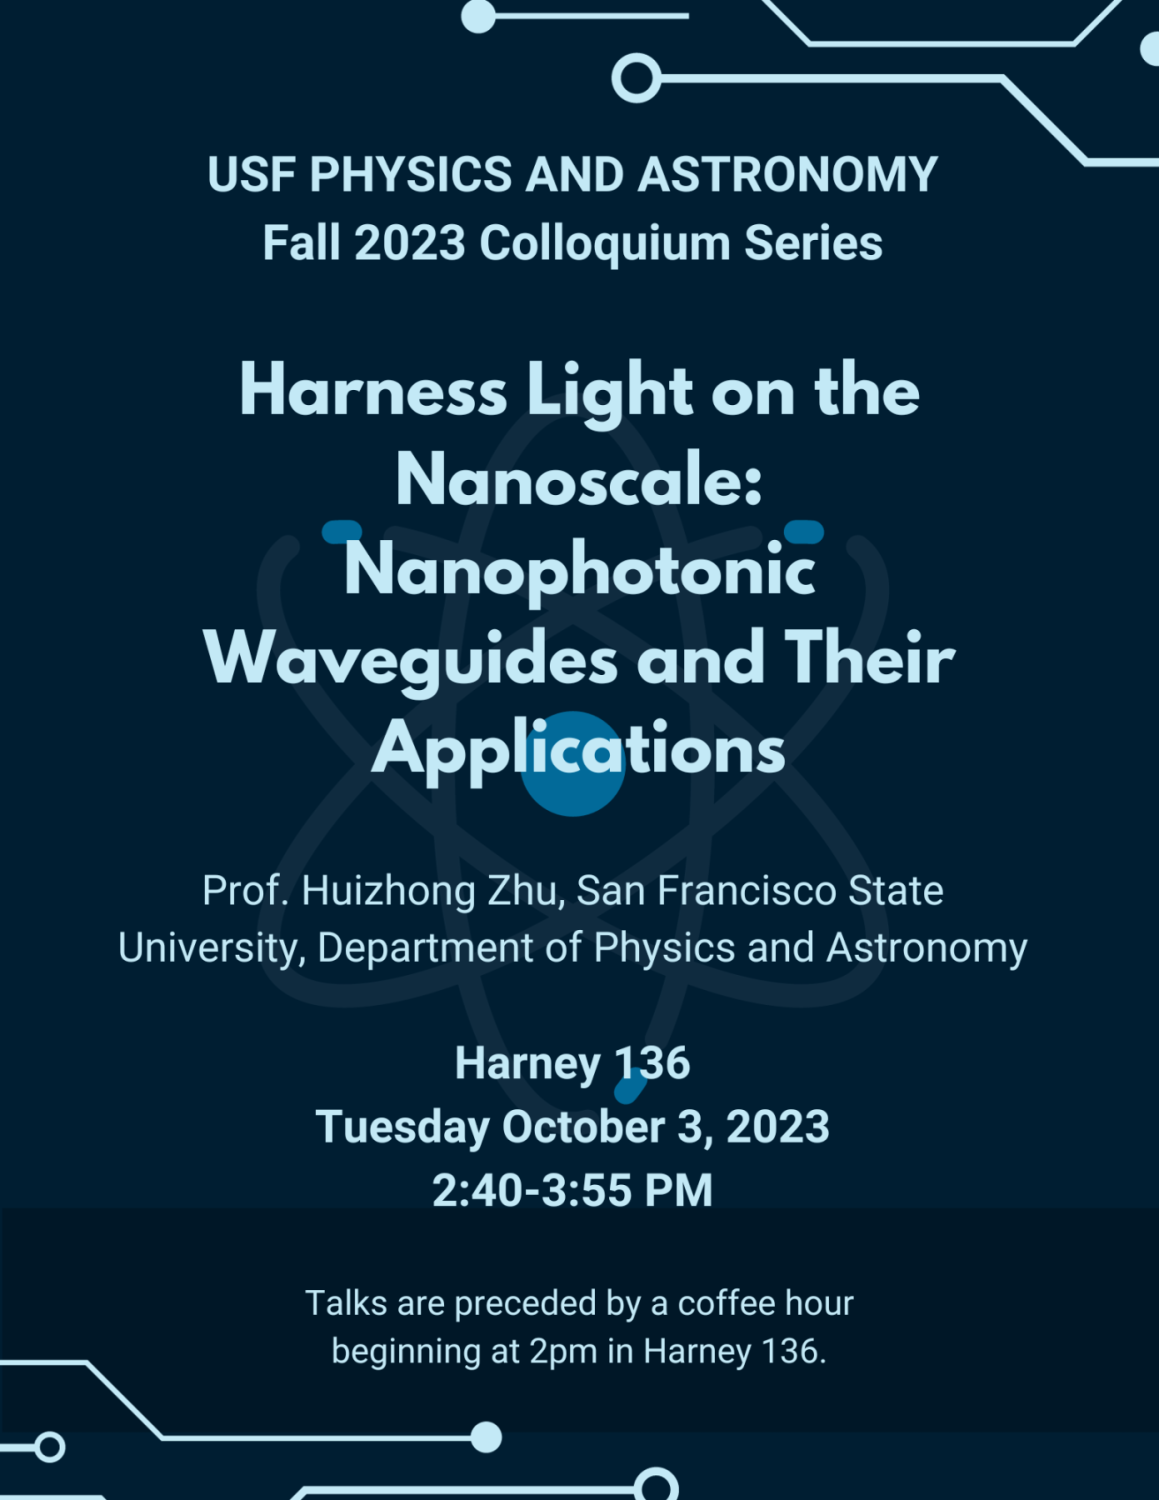 Huizhong XU's colloquium talk on nanophotonic waveguides on Tuesday October 3, 2023